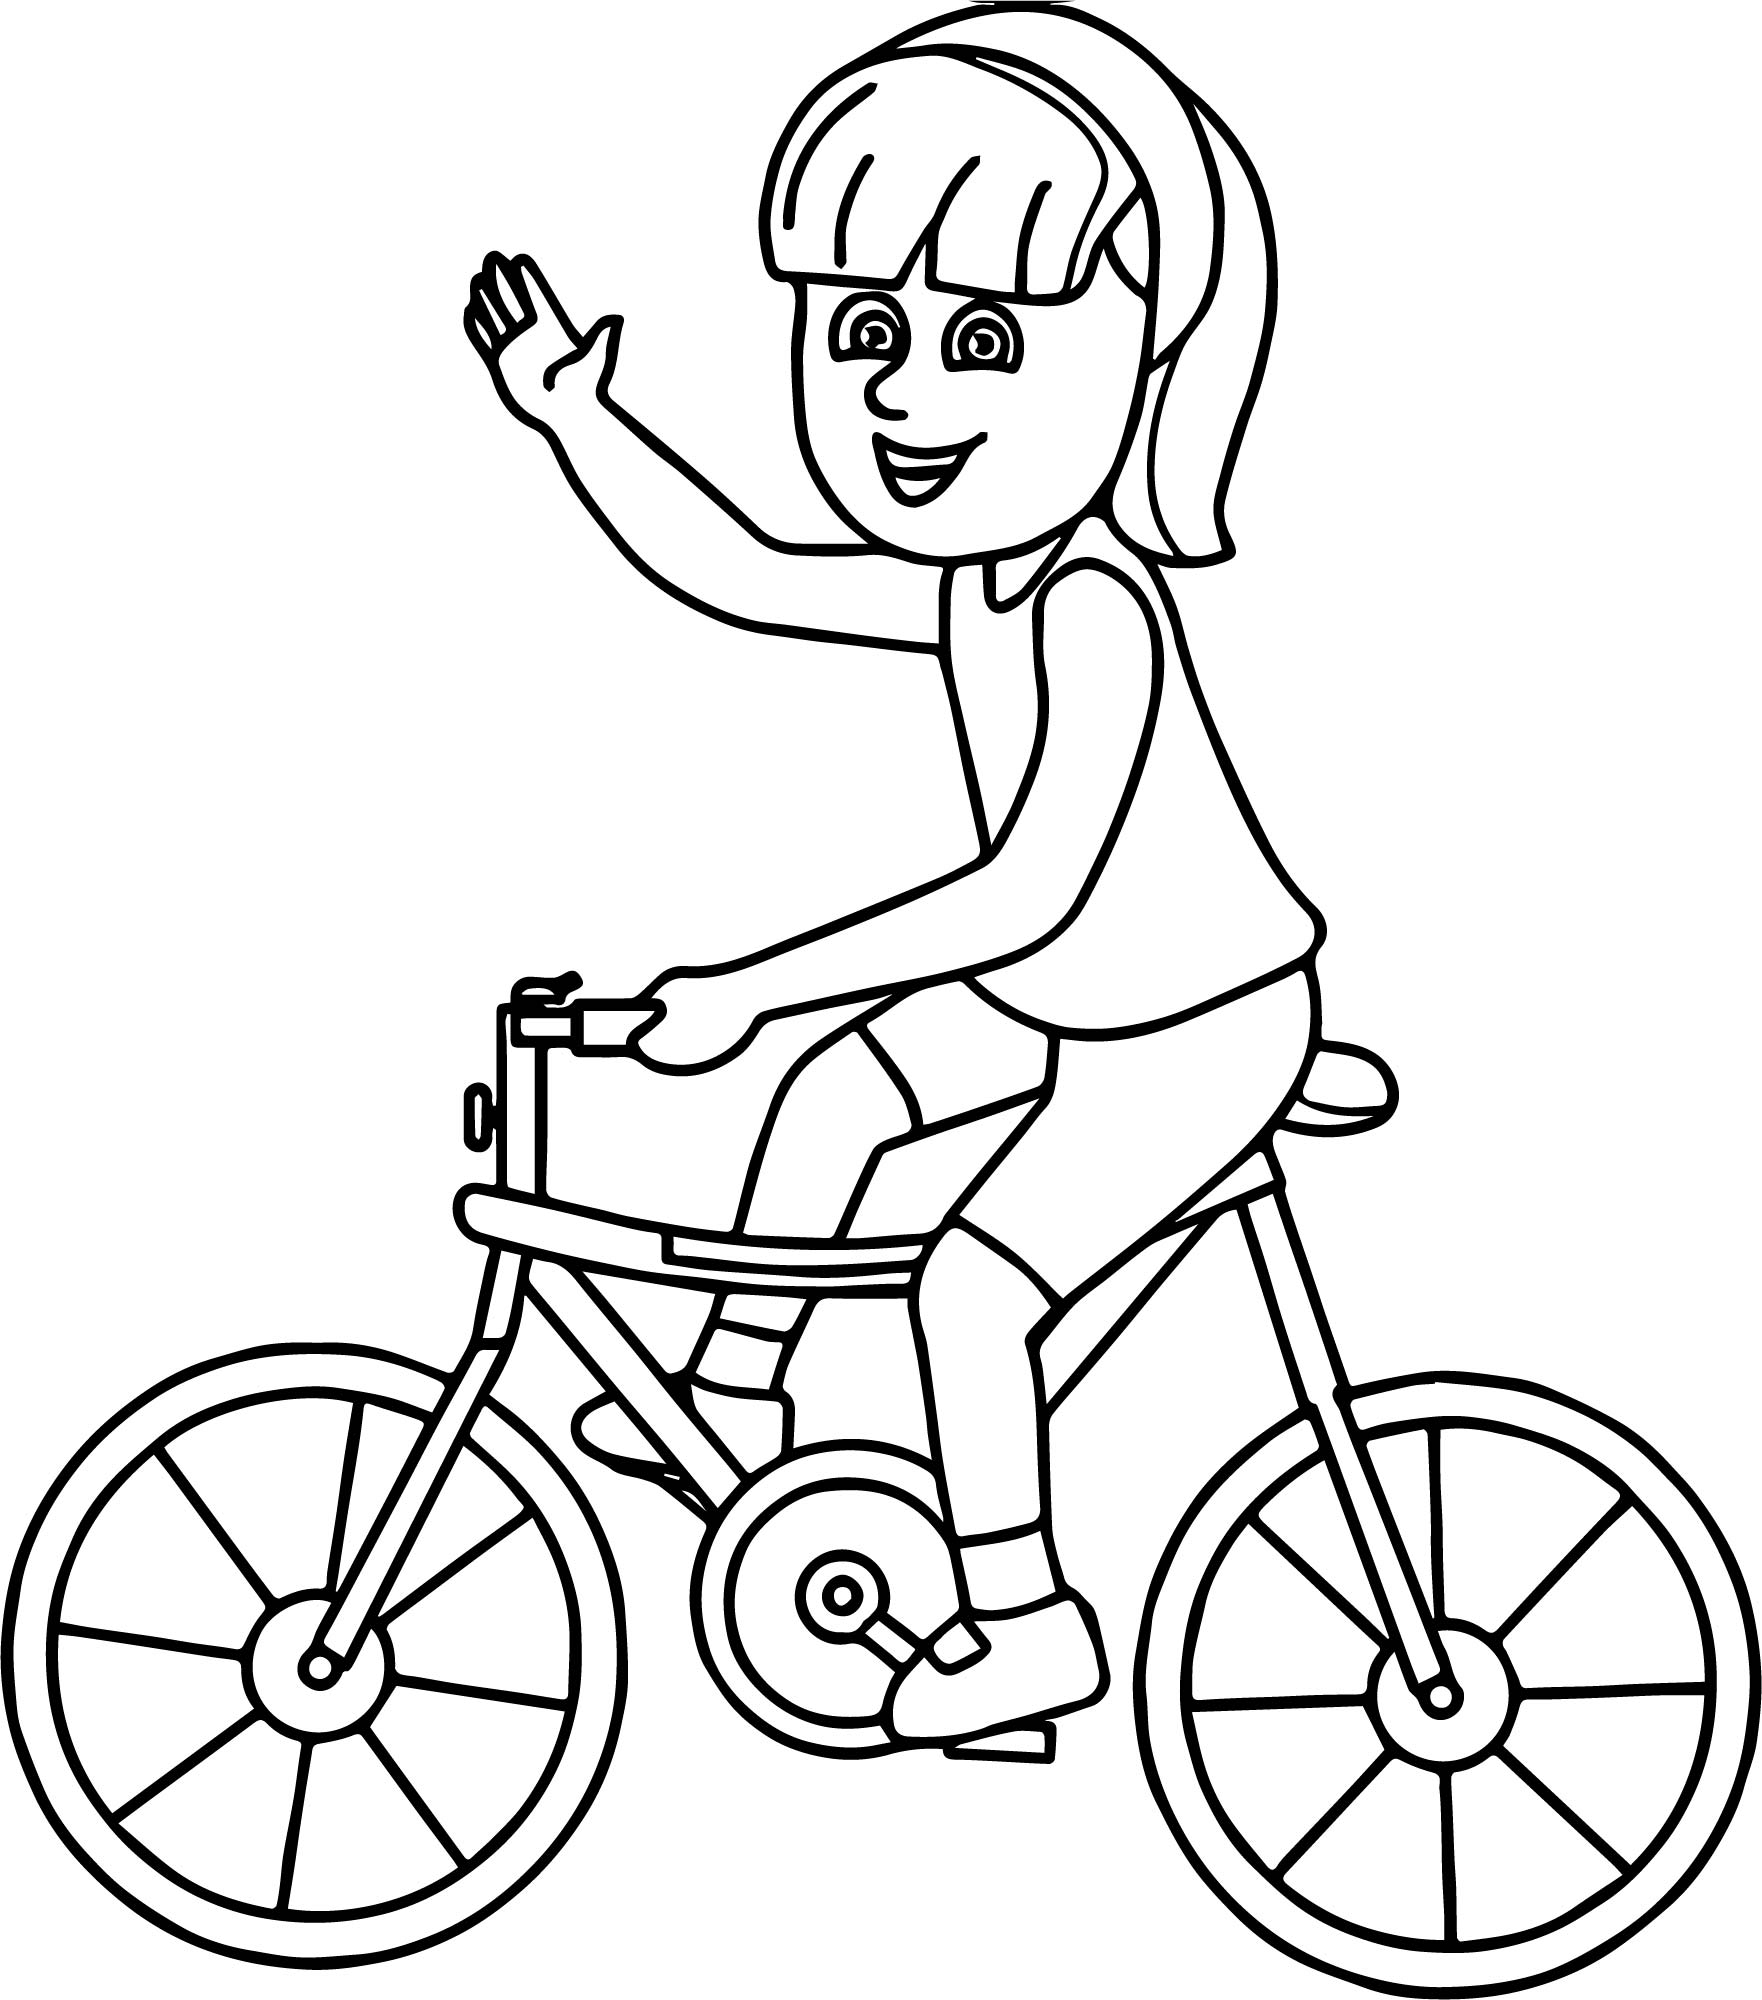 Bmx Bike Coloring Page at Free printable colorings